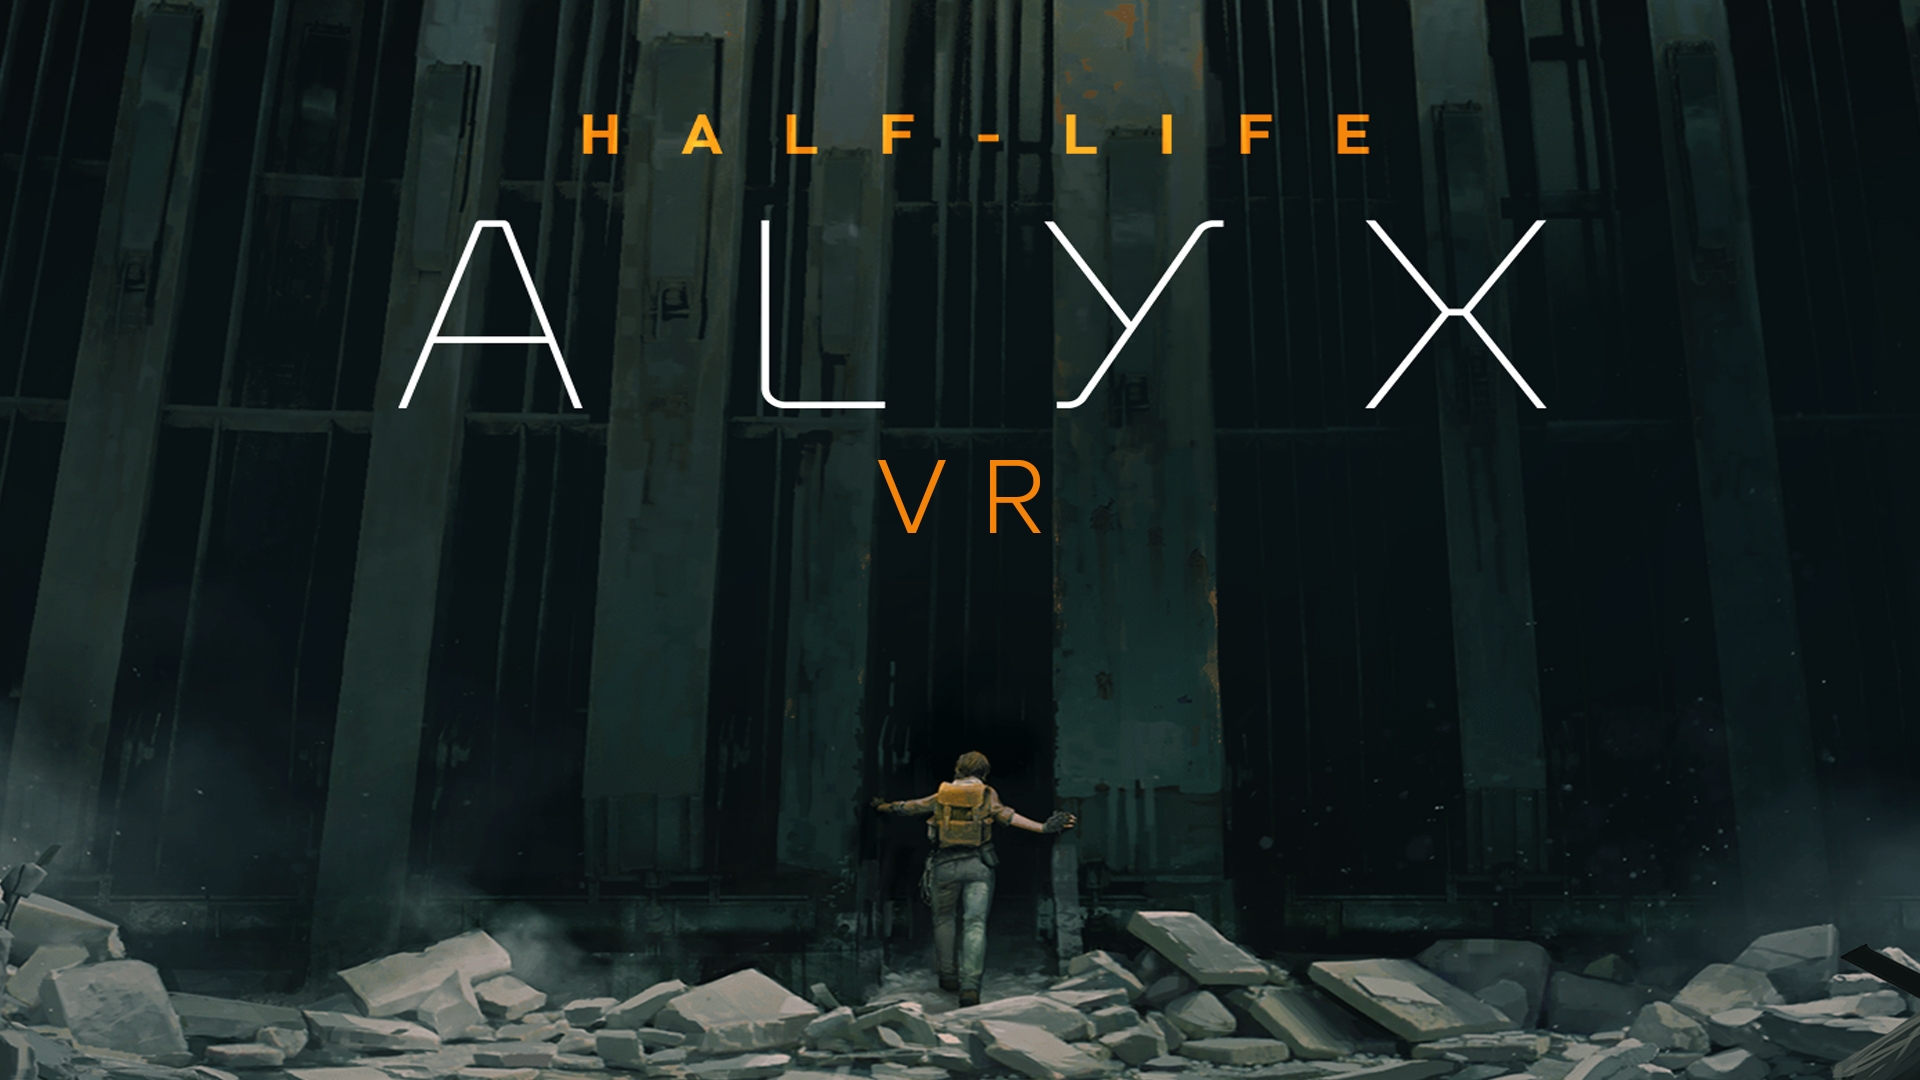 HALF LIFE - ALYX CREATES SENSATION IN VR GAMING-AffinityVR